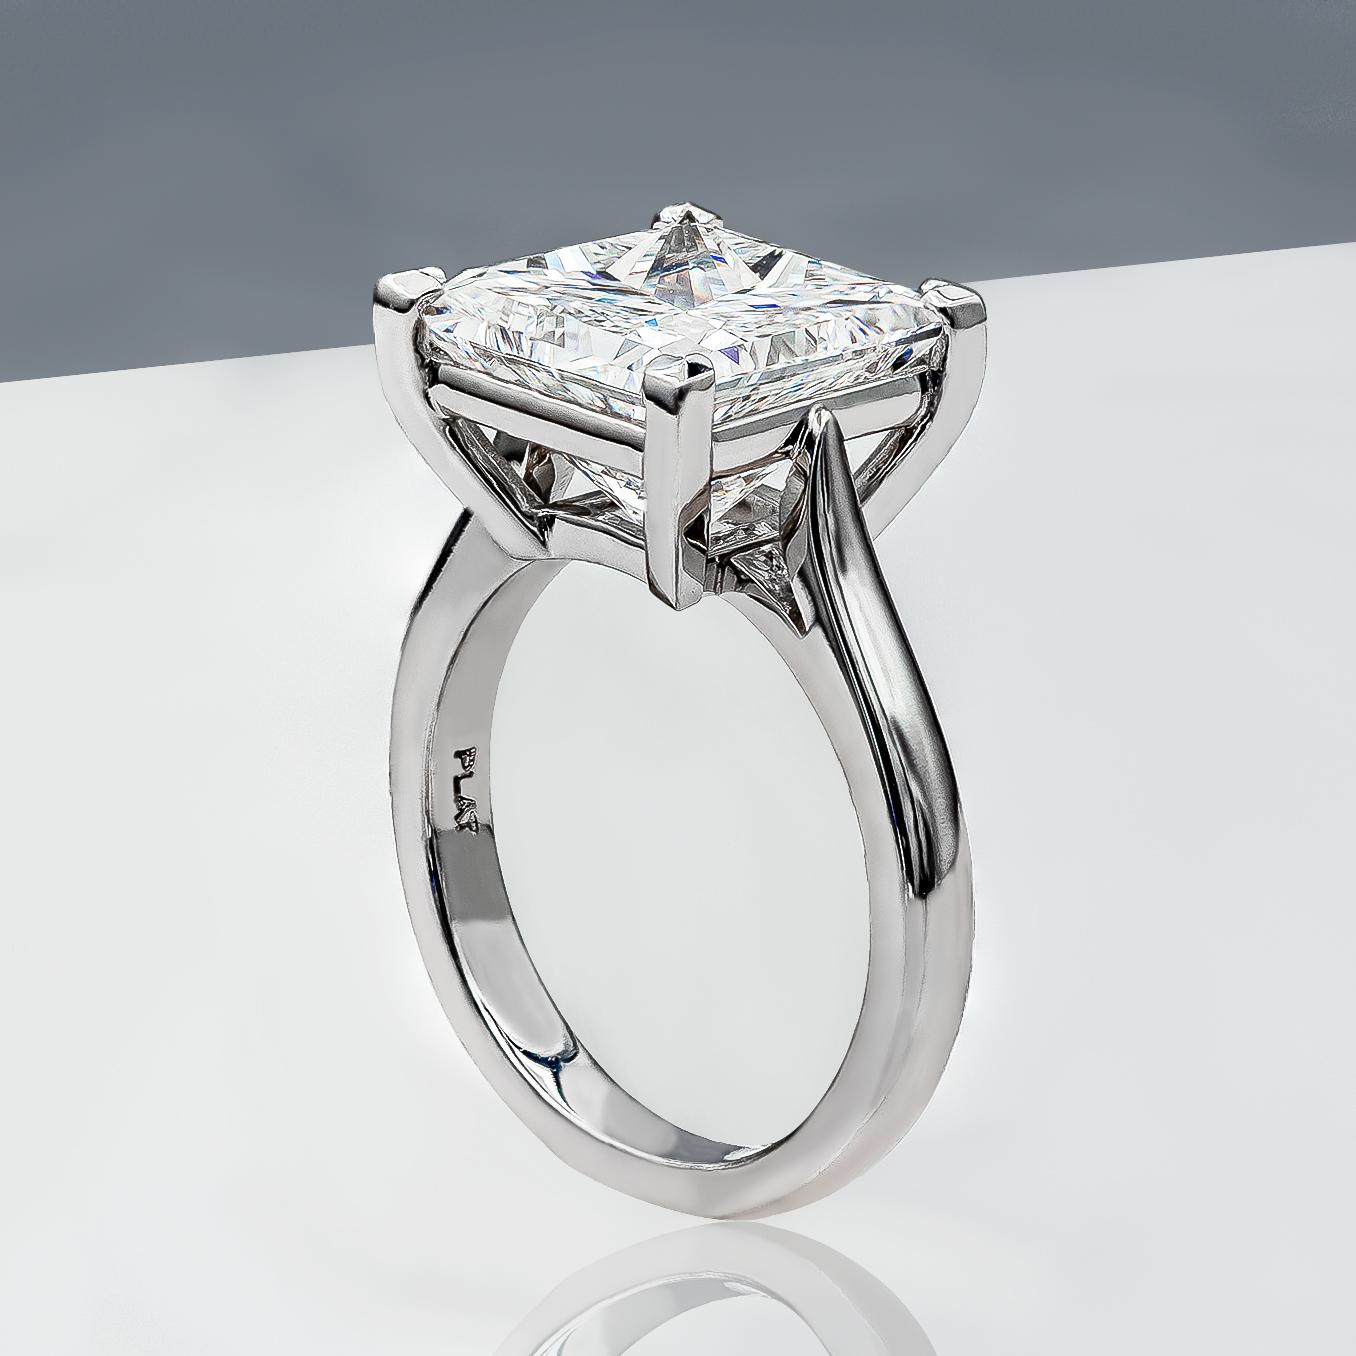 $100 000 engagement ring